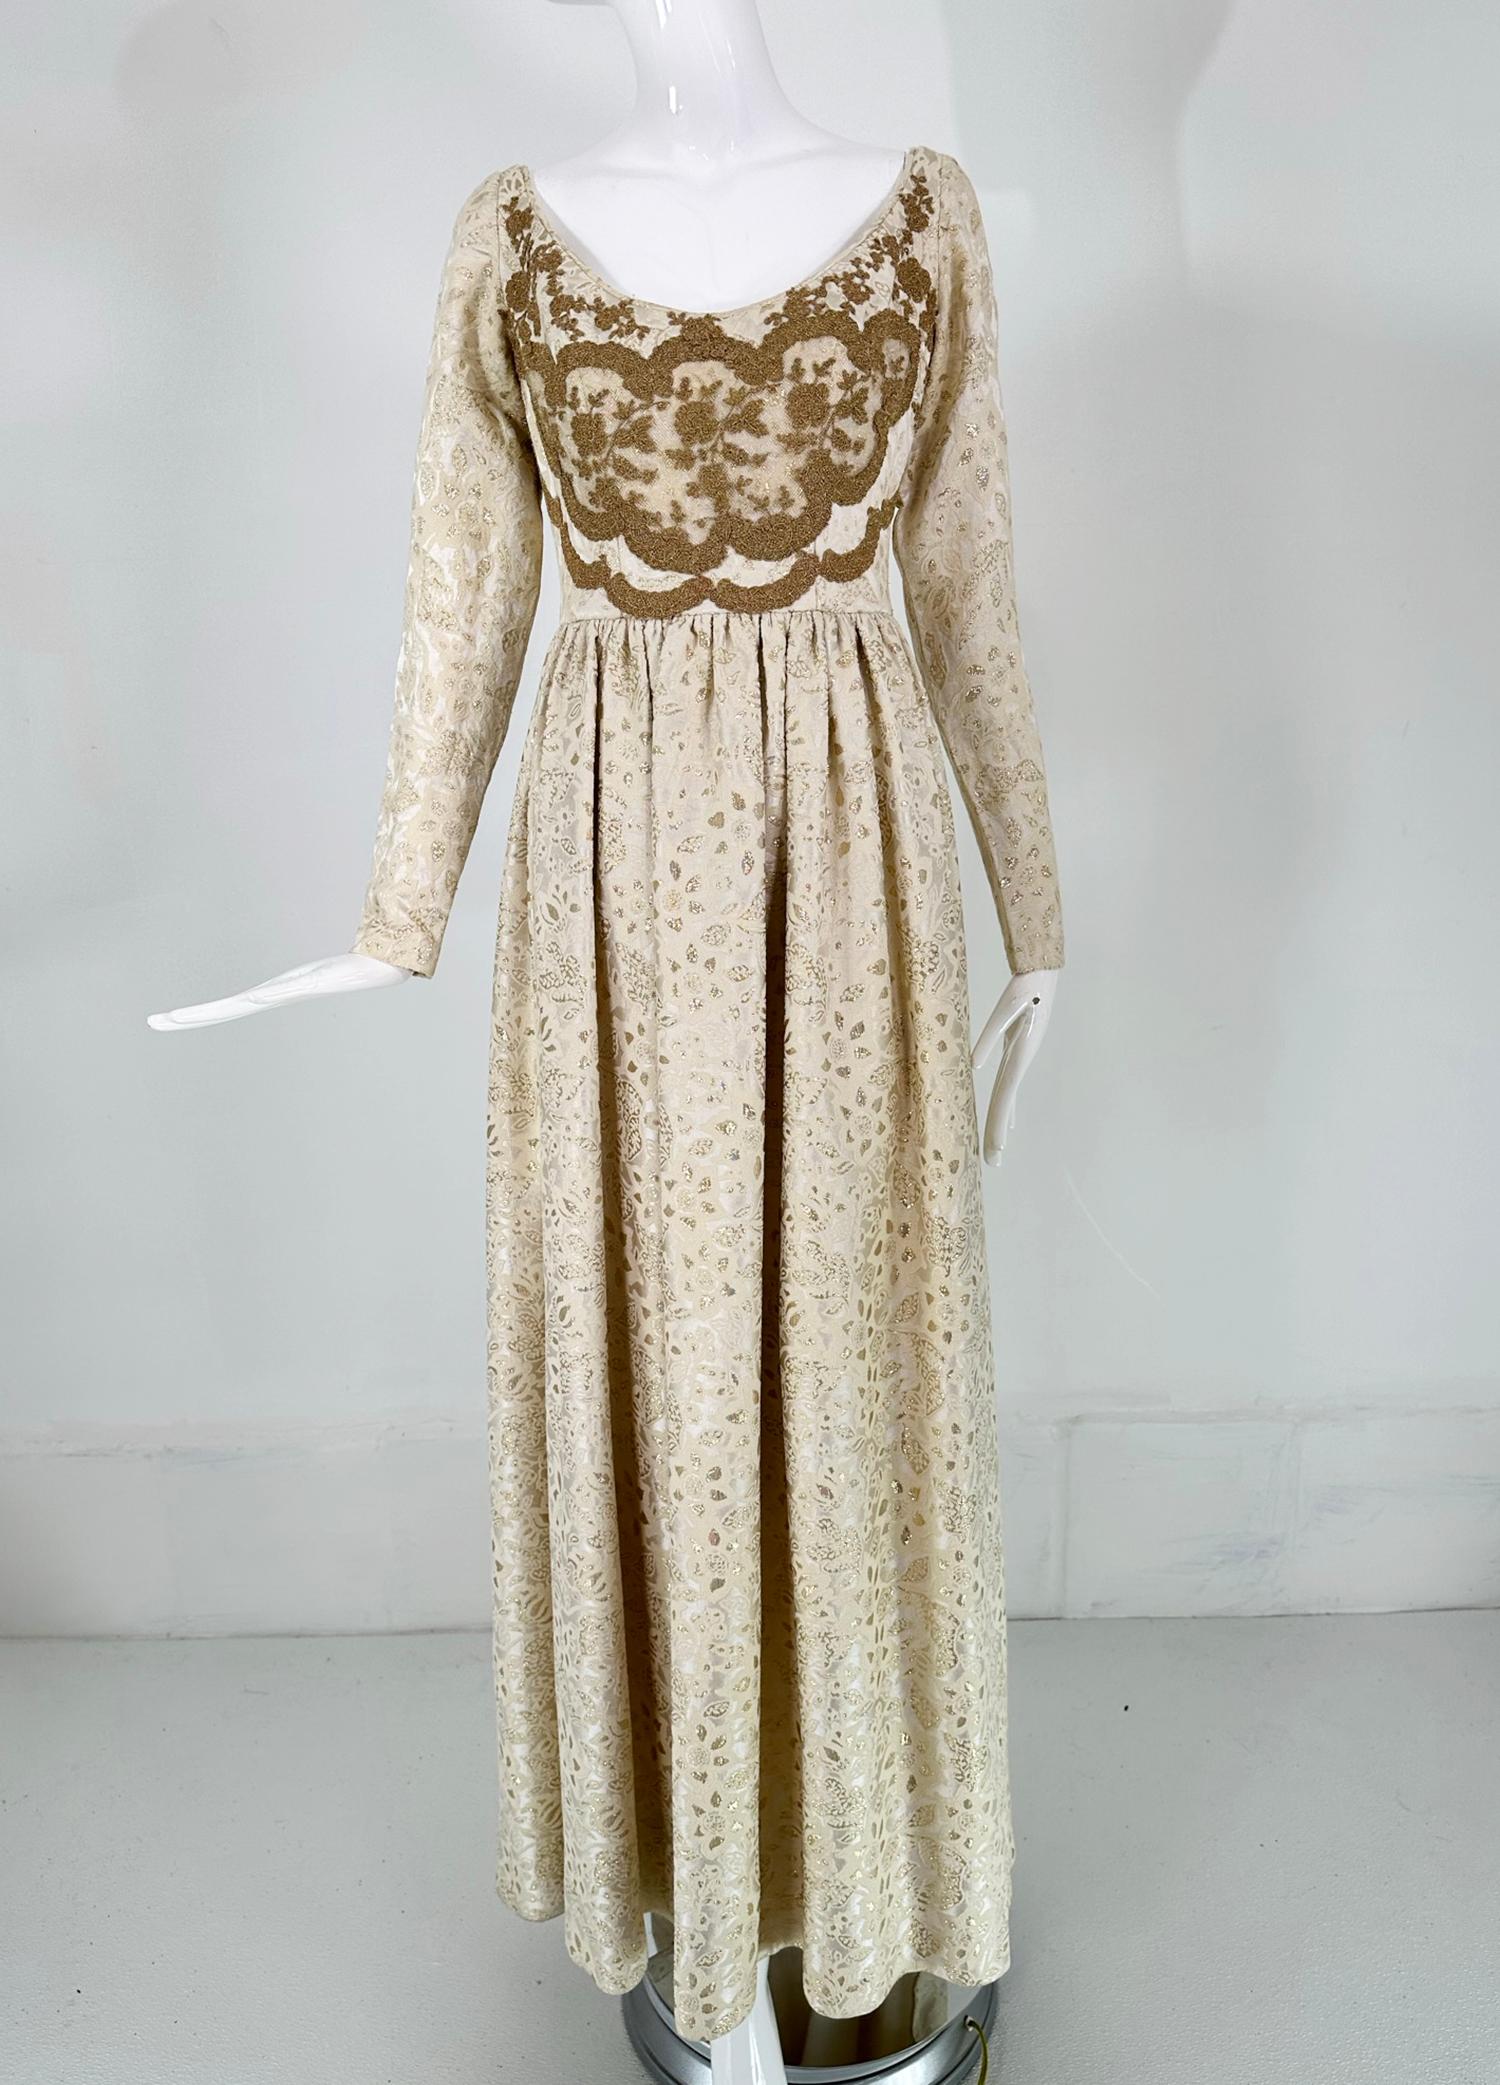 Galitizne Couture Renaissance Style Gown in Cream & Gold Metallic Brocade 1970s For Sale 9